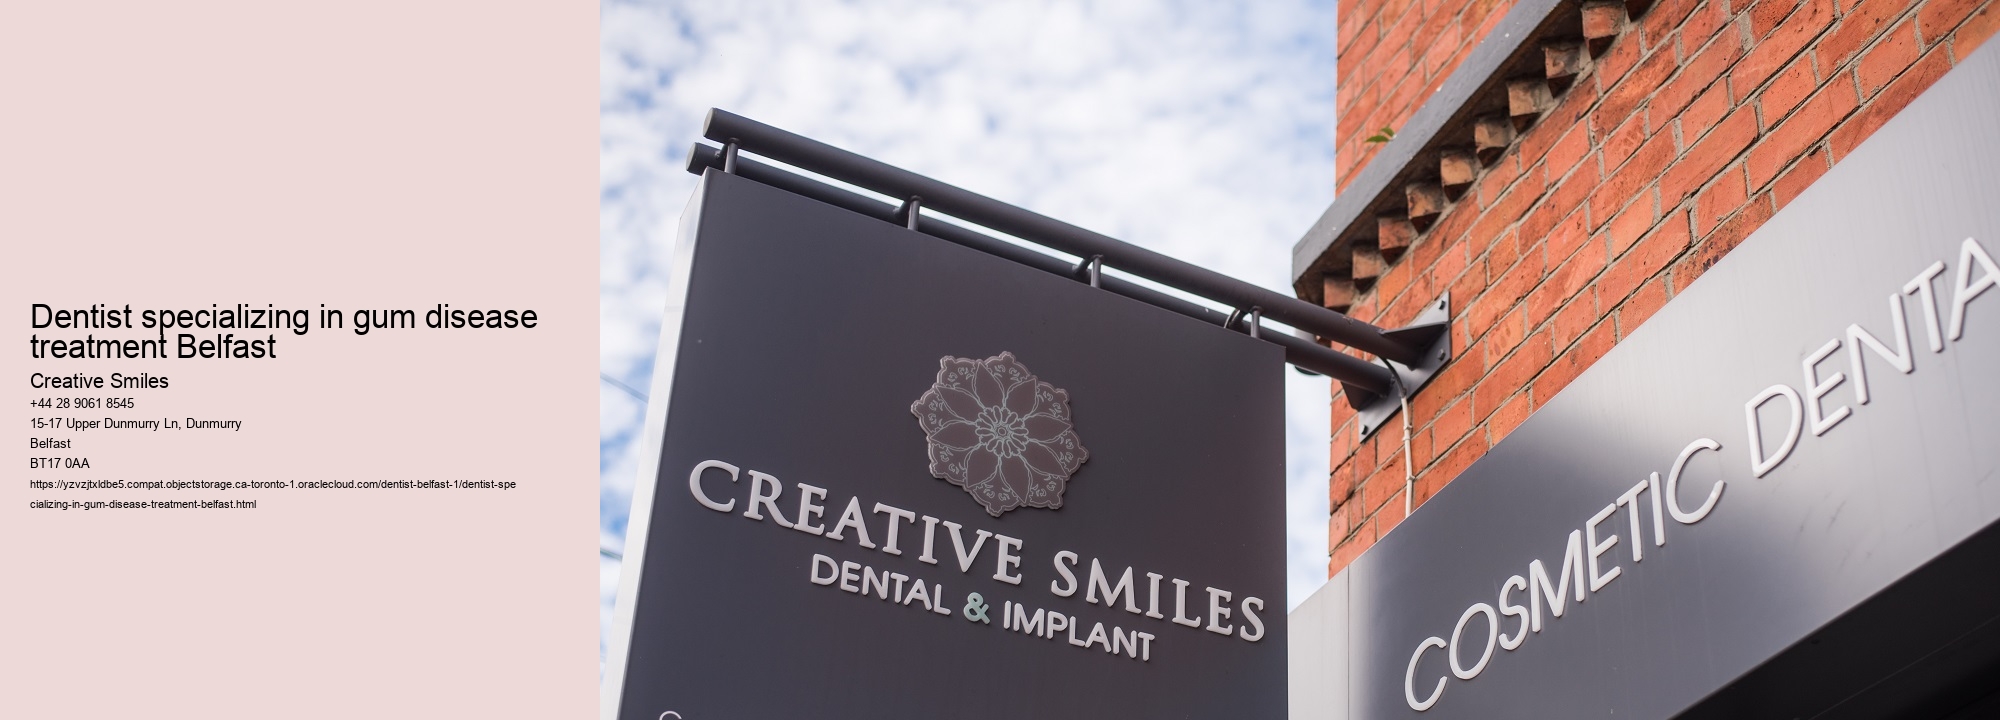 Dentist specializing in gum disease treatment Belfast